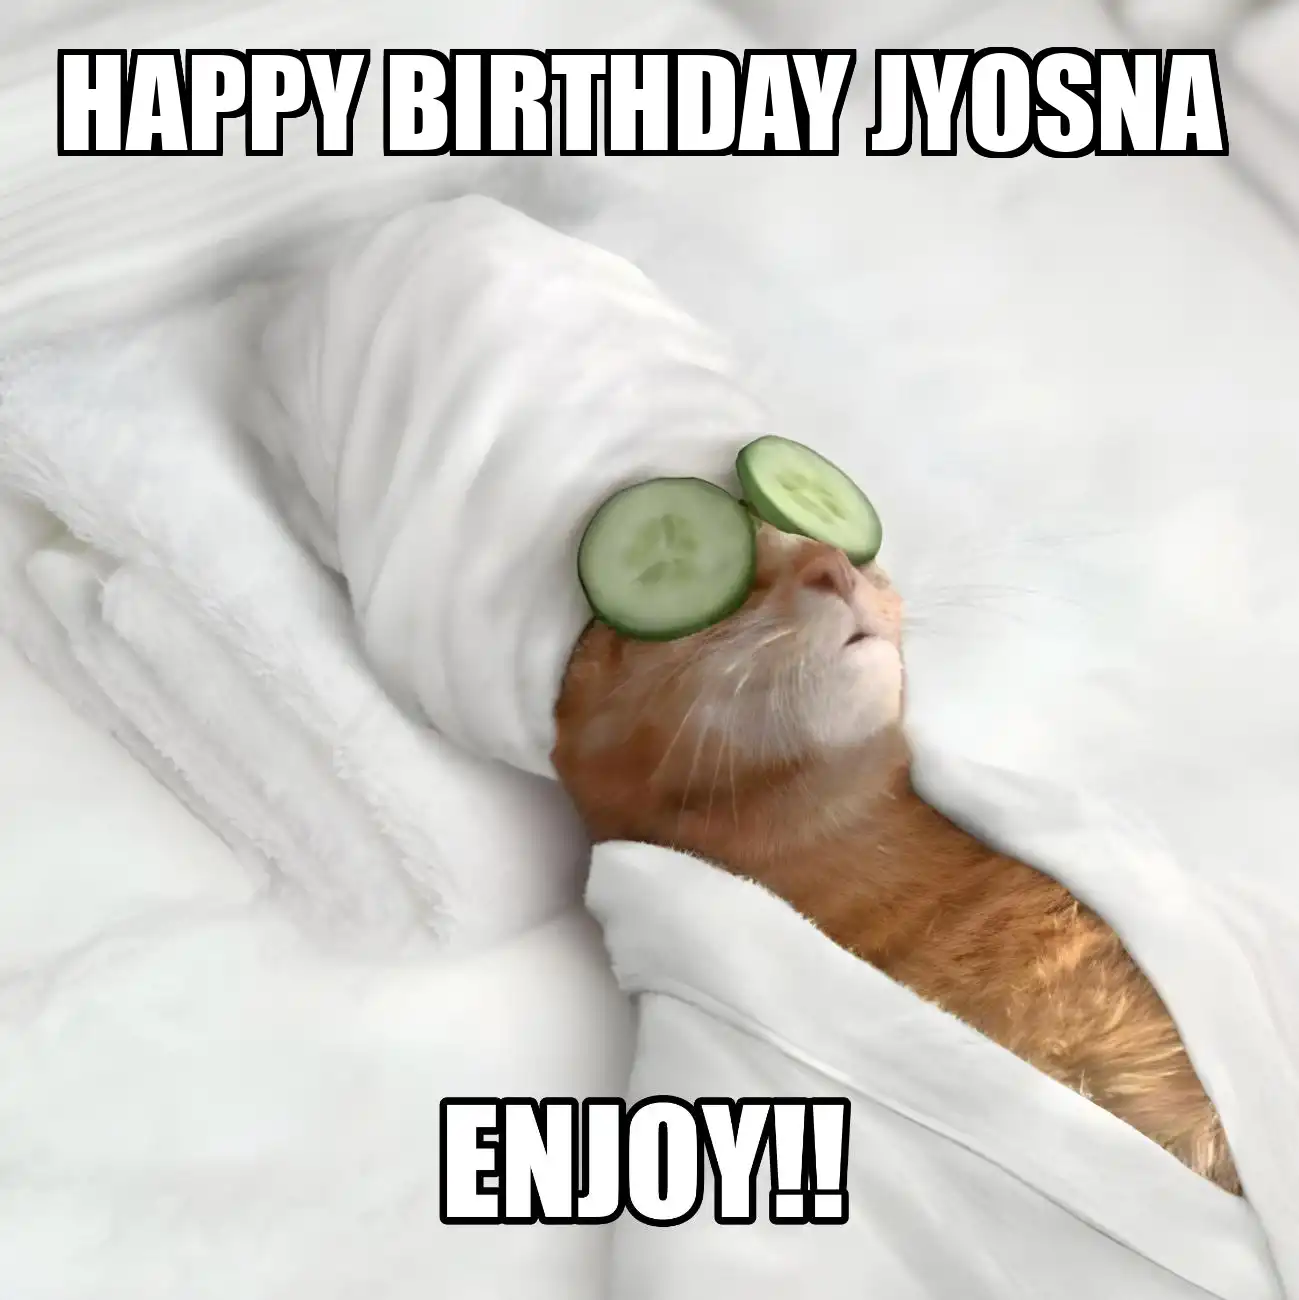 Happy Birthday Jyosna Enjoy Cat Meme